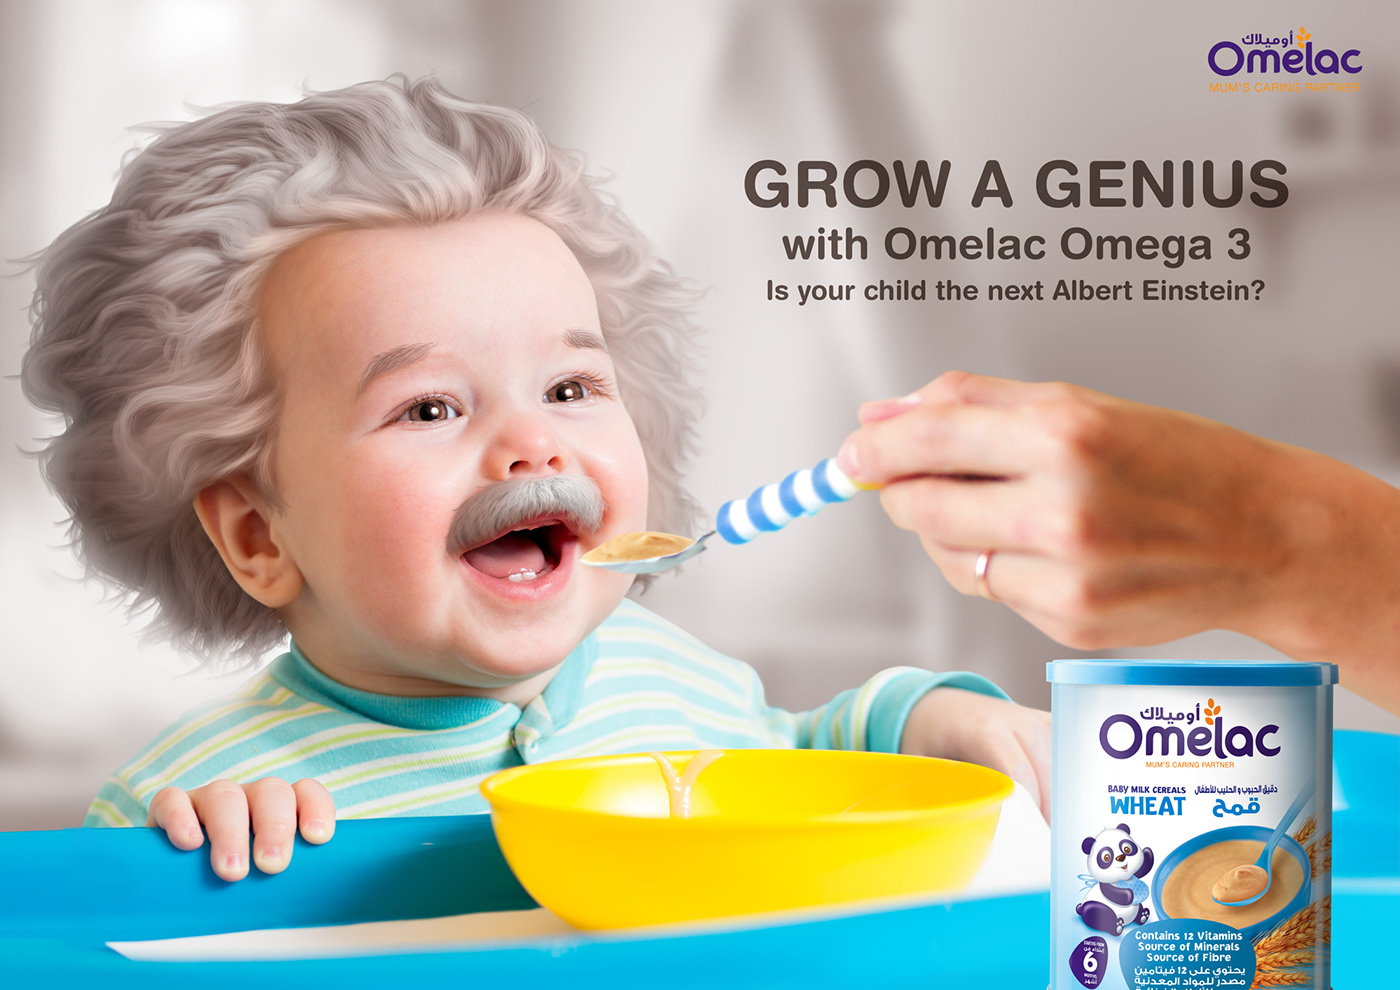 grow genius ad einstein albert shakespeare grahambell Cereal baby babies wheat Omega 3